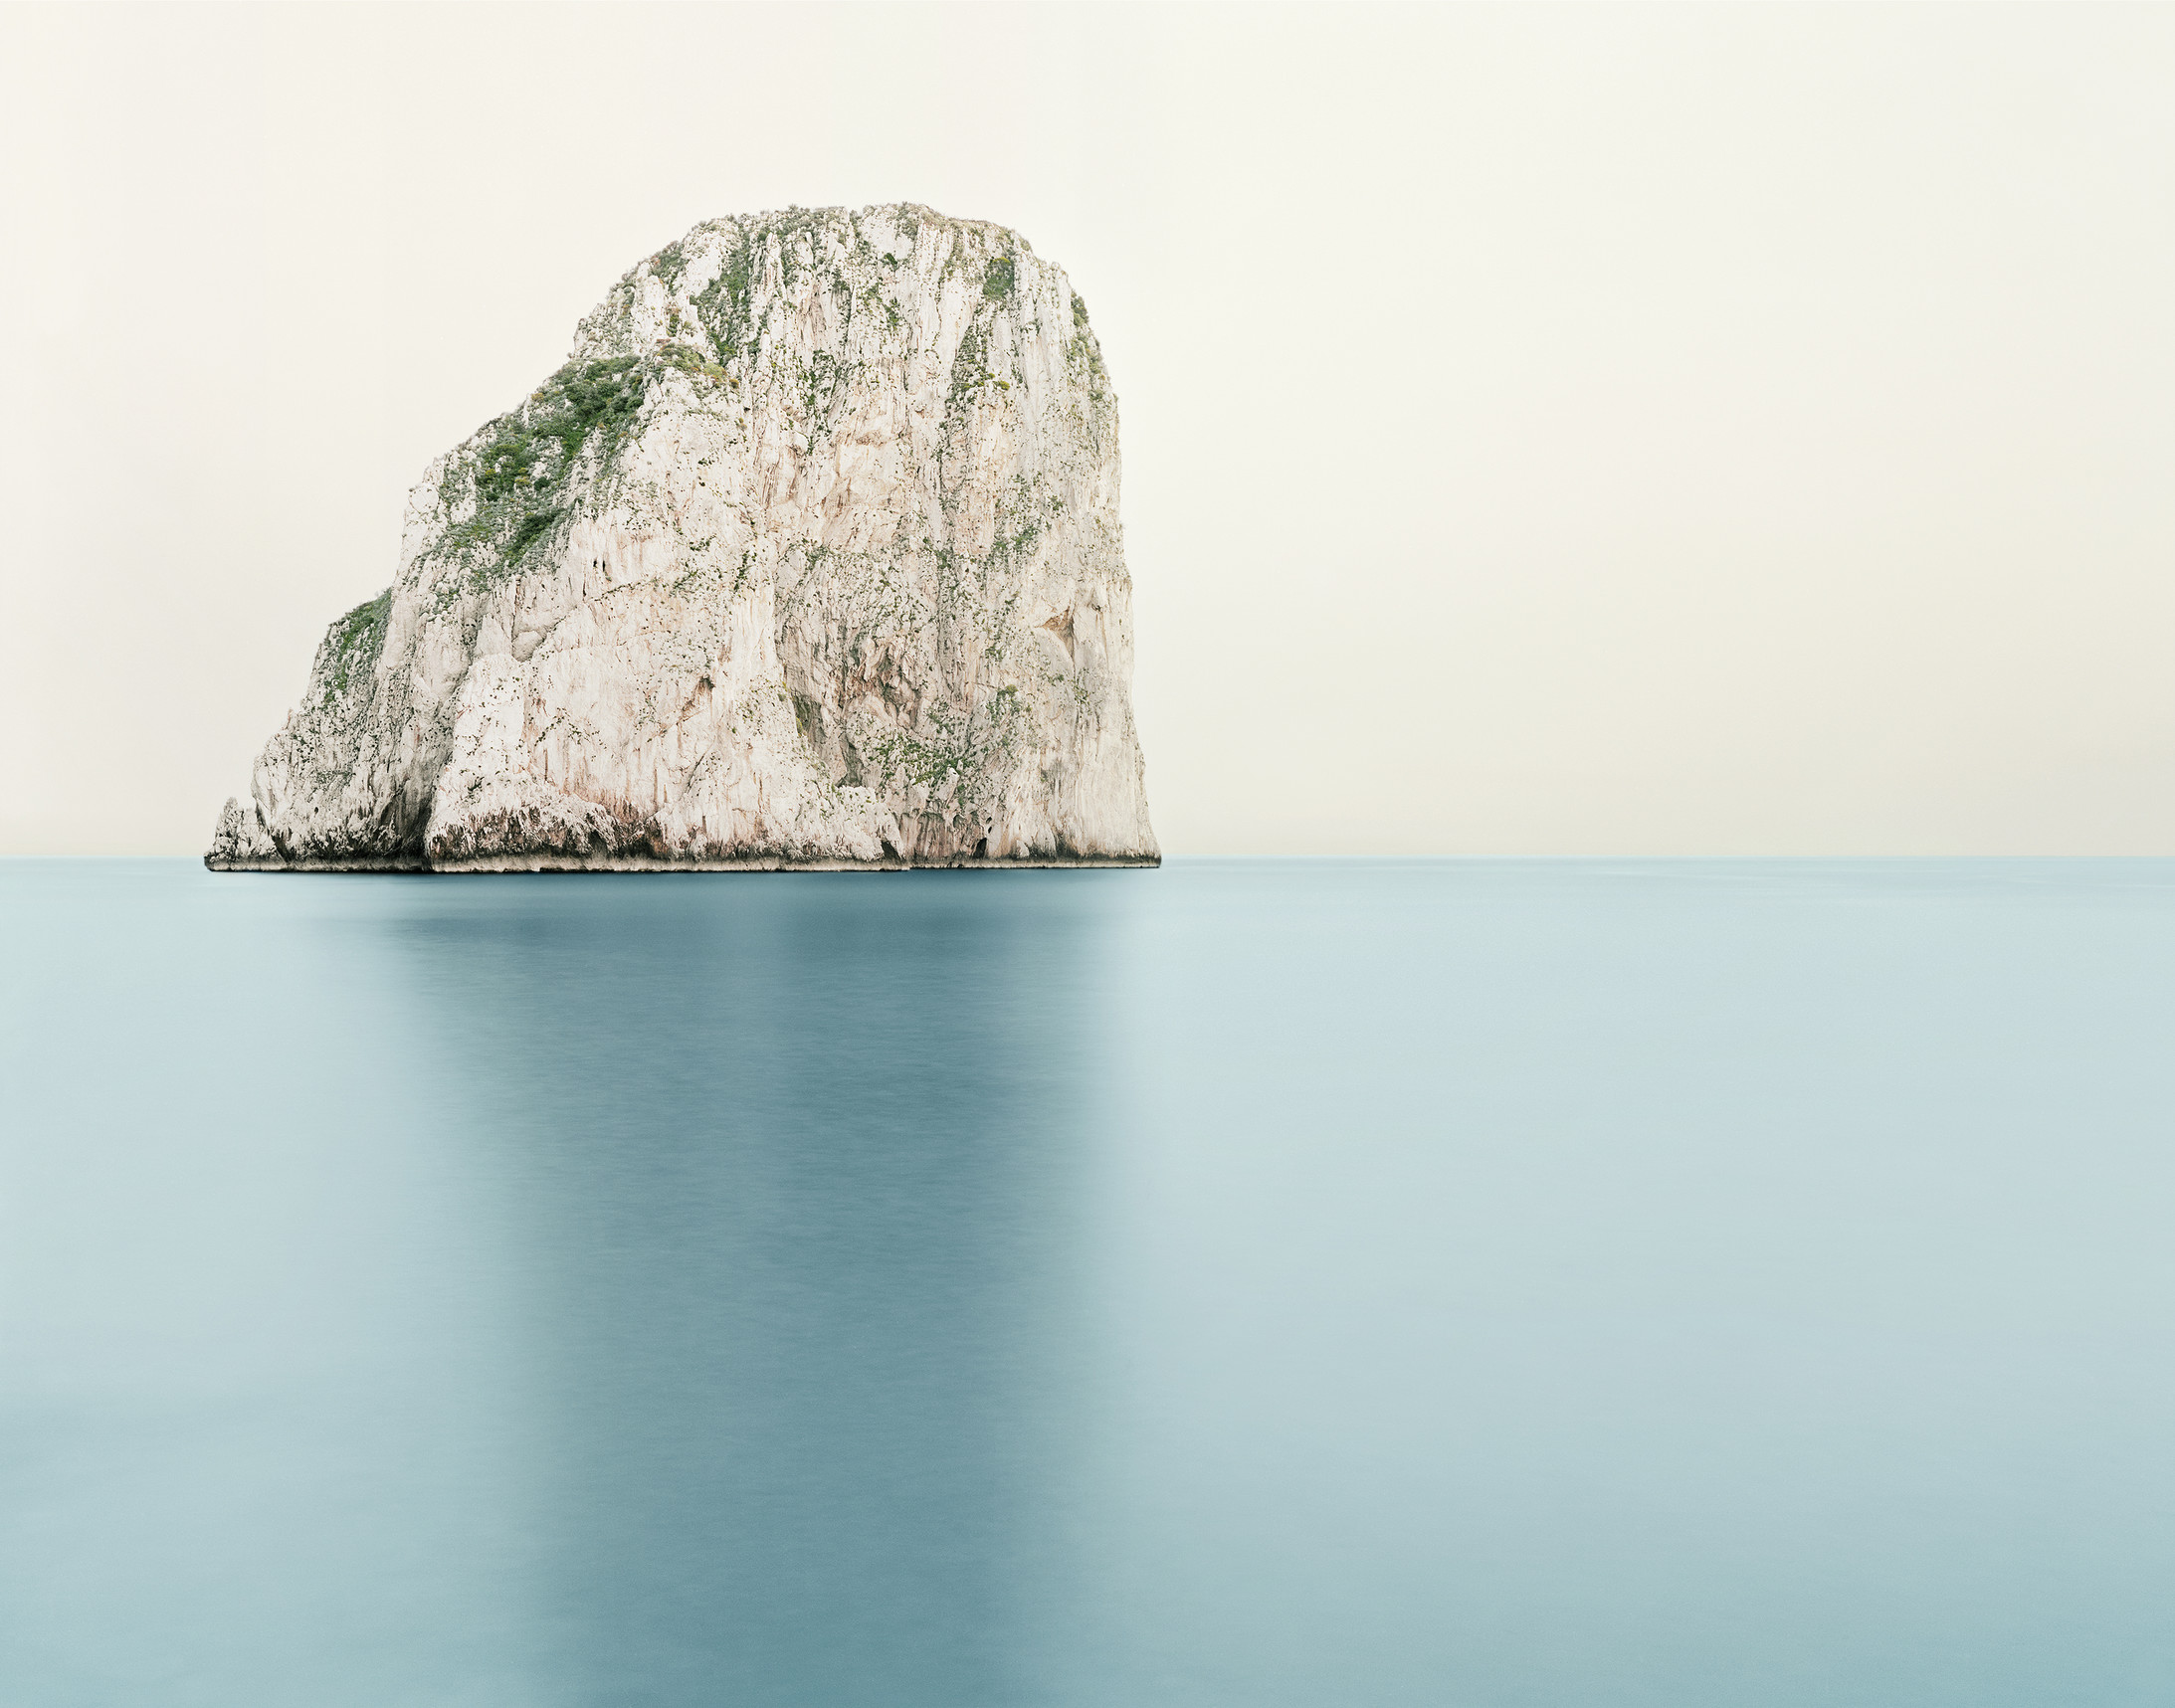 Capri. The Diefenbach Chronicles, #003, 2013 © Francesco Jodice